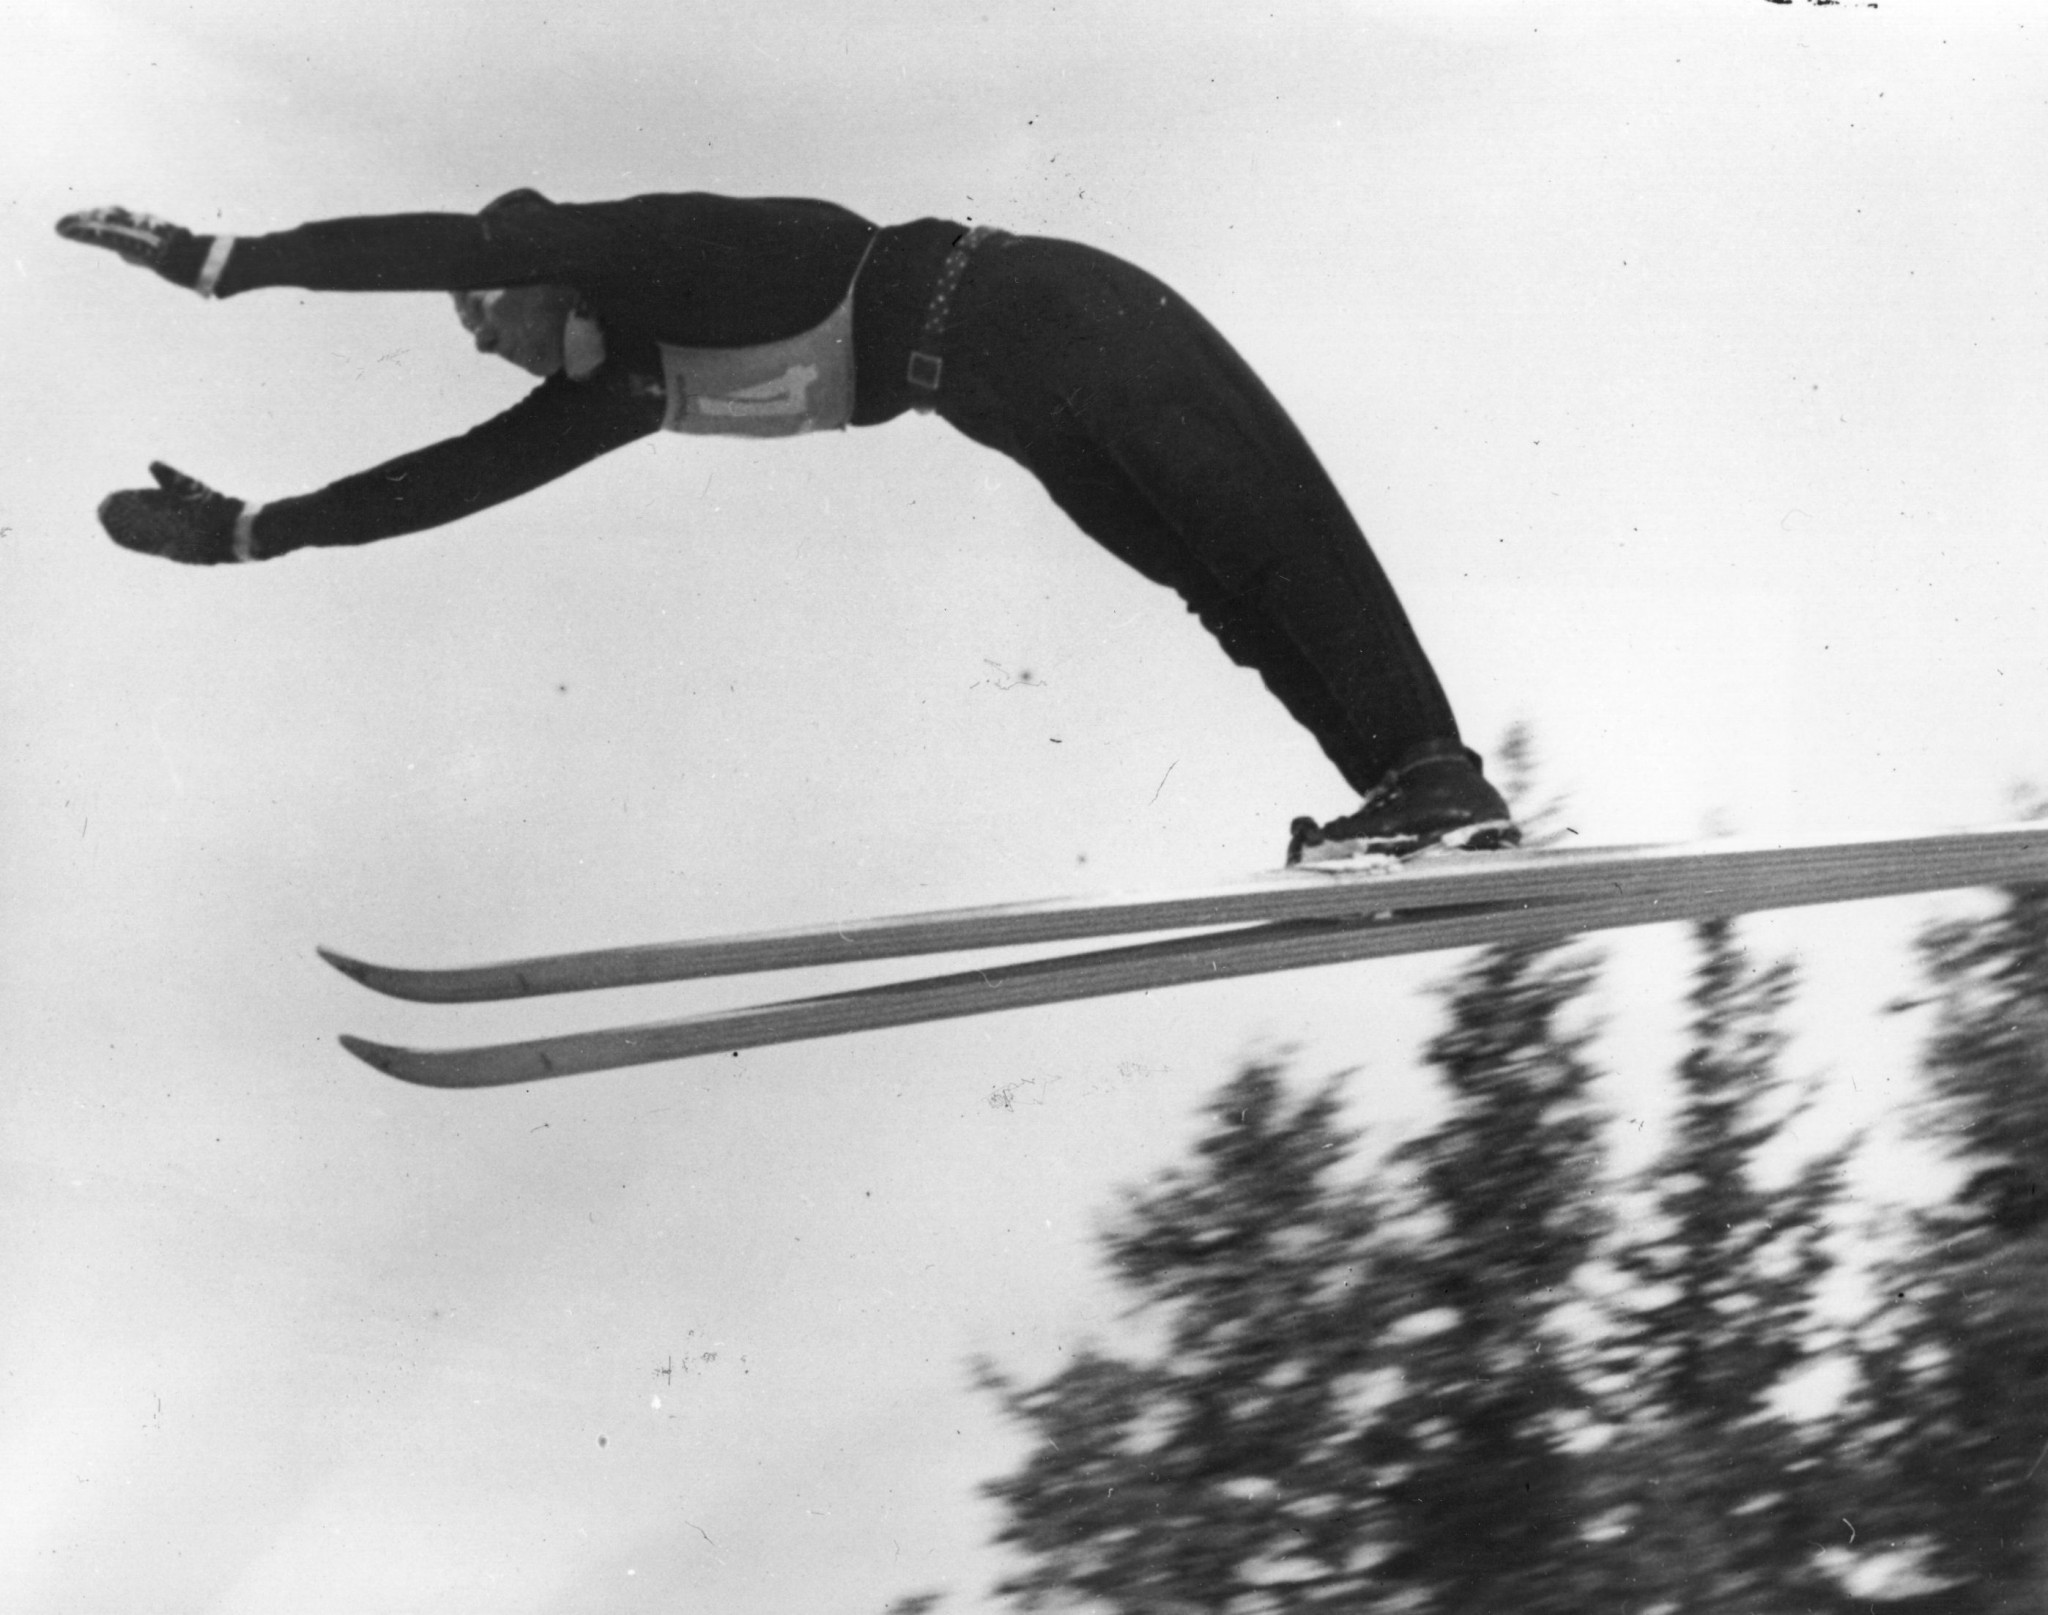 Swiss ski jumping pioneer Andreas Däscher dies at 96